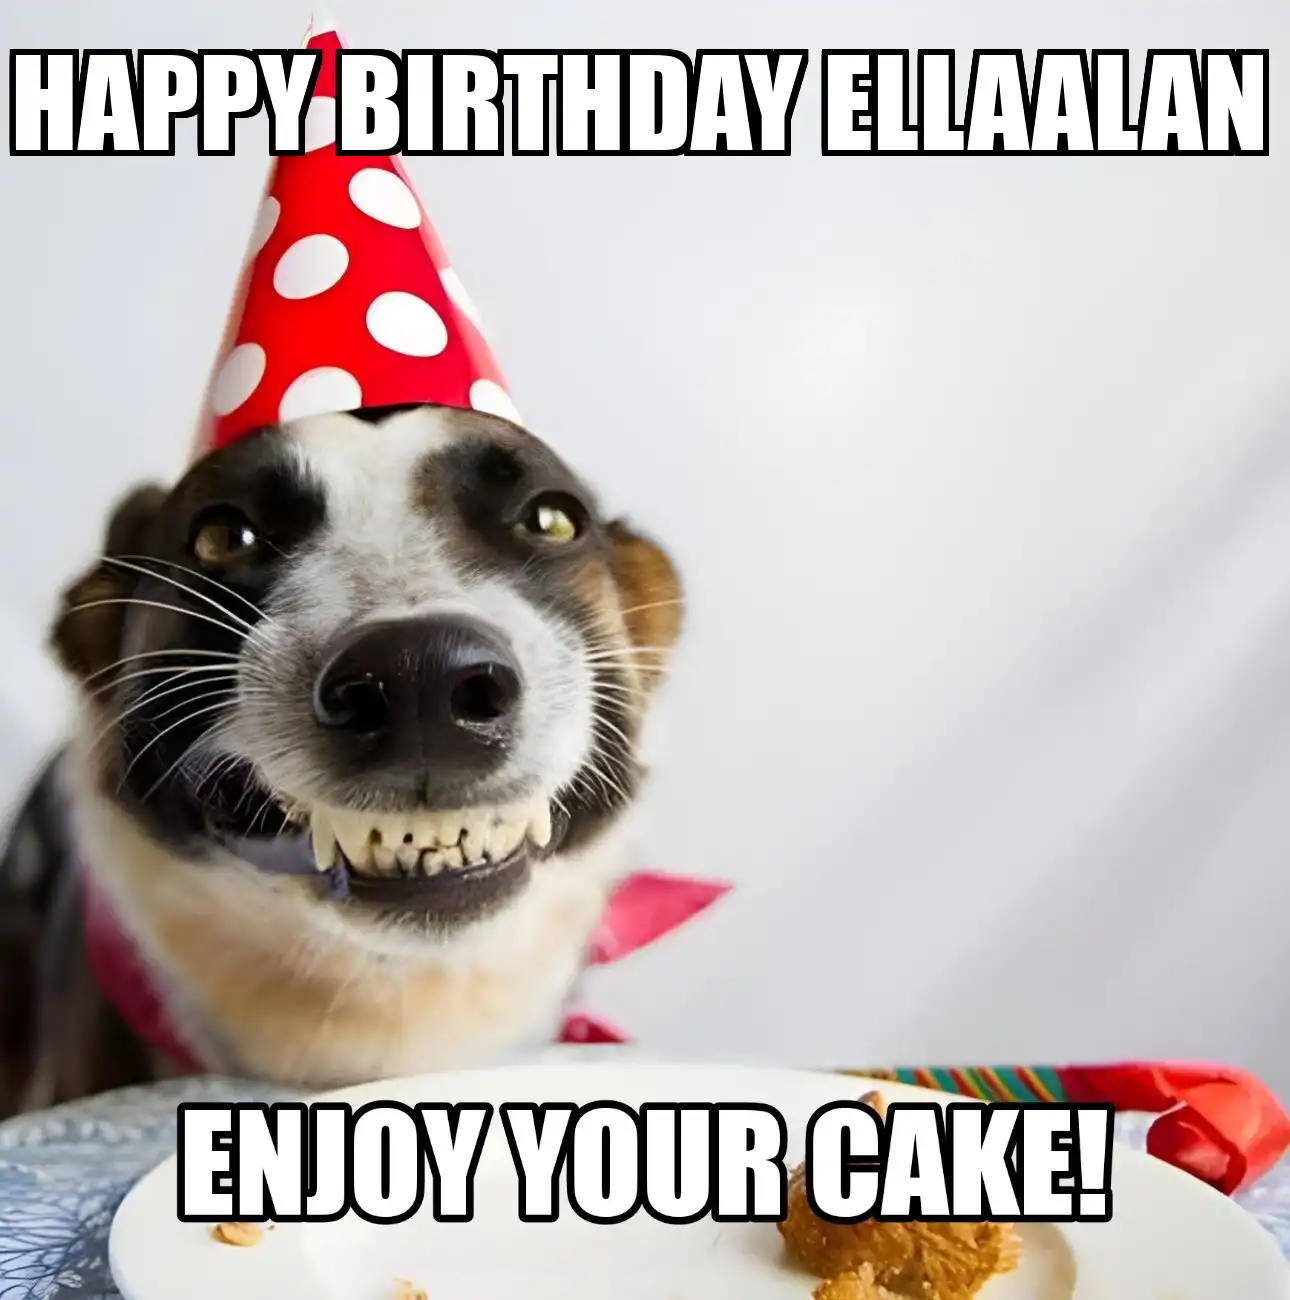 Happy Birthday Ellaalan Enjoy Your Cake Dog Meme